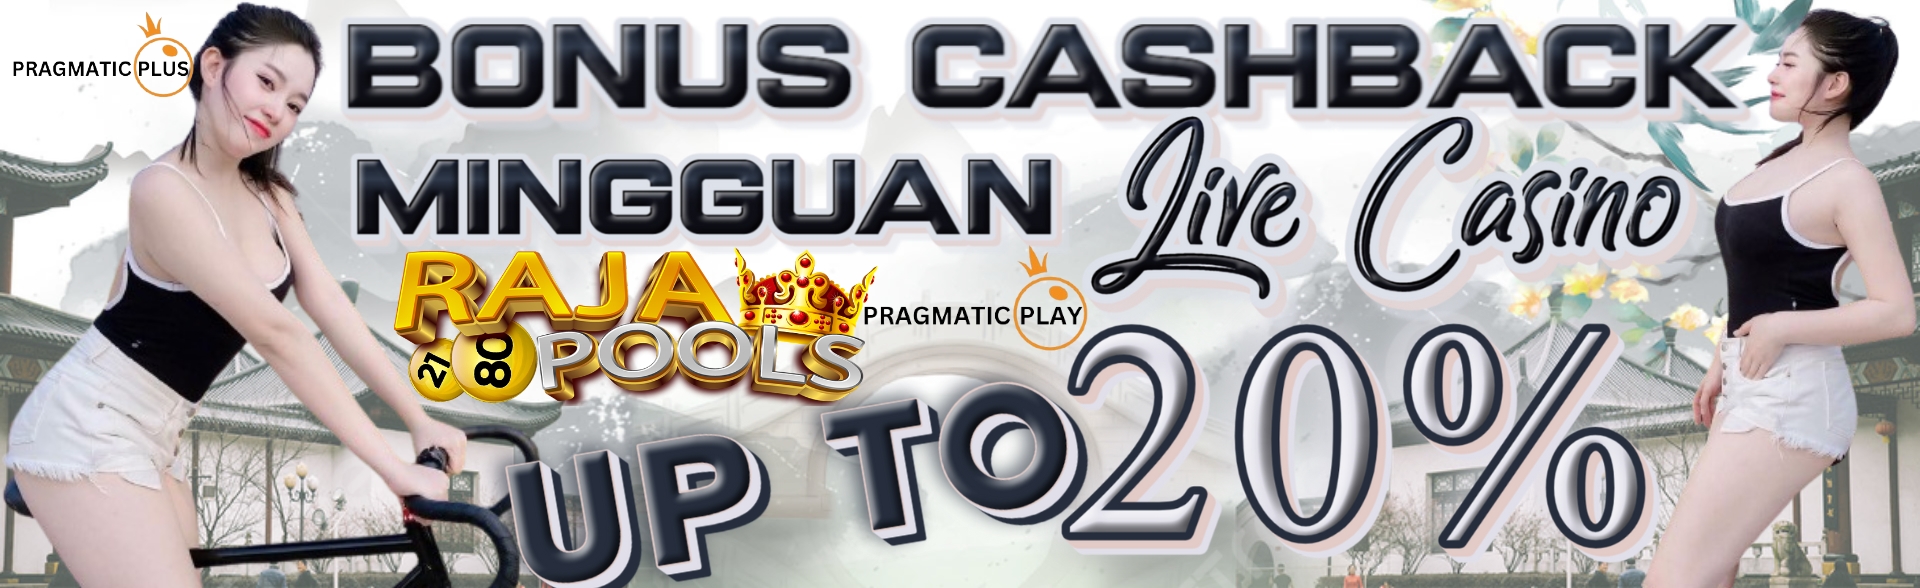 Bonus Cashback Casino Up To 20 %